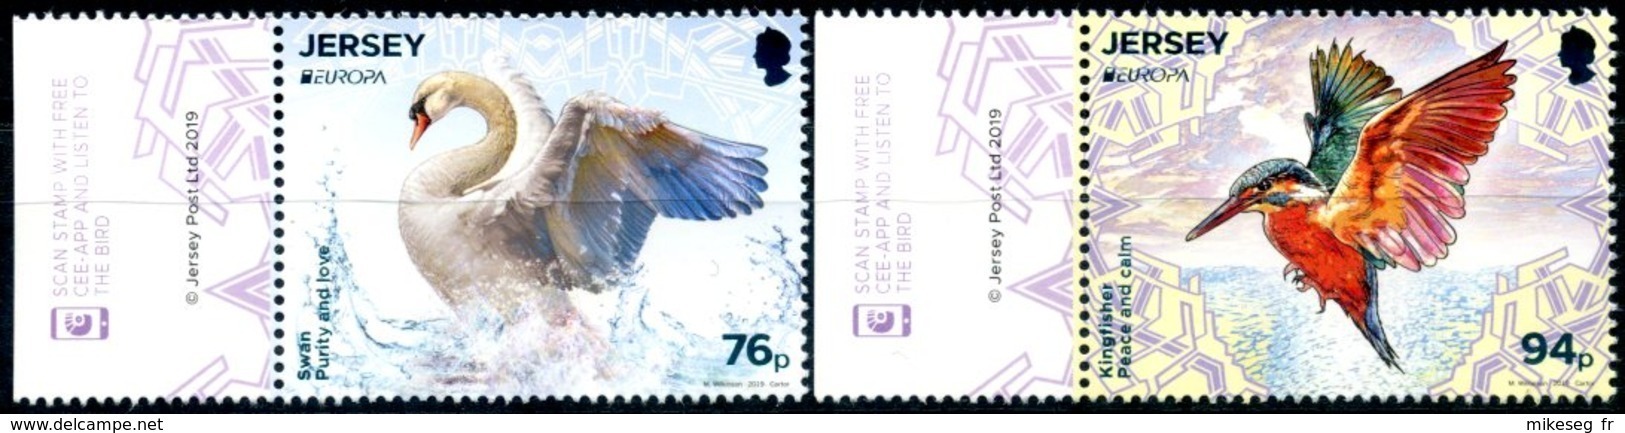 Europa 2019 - Jersey - National Birds - Oiseaux (swan, Kingfisher) (cygne, Martin-pêcheur) ** - 2019